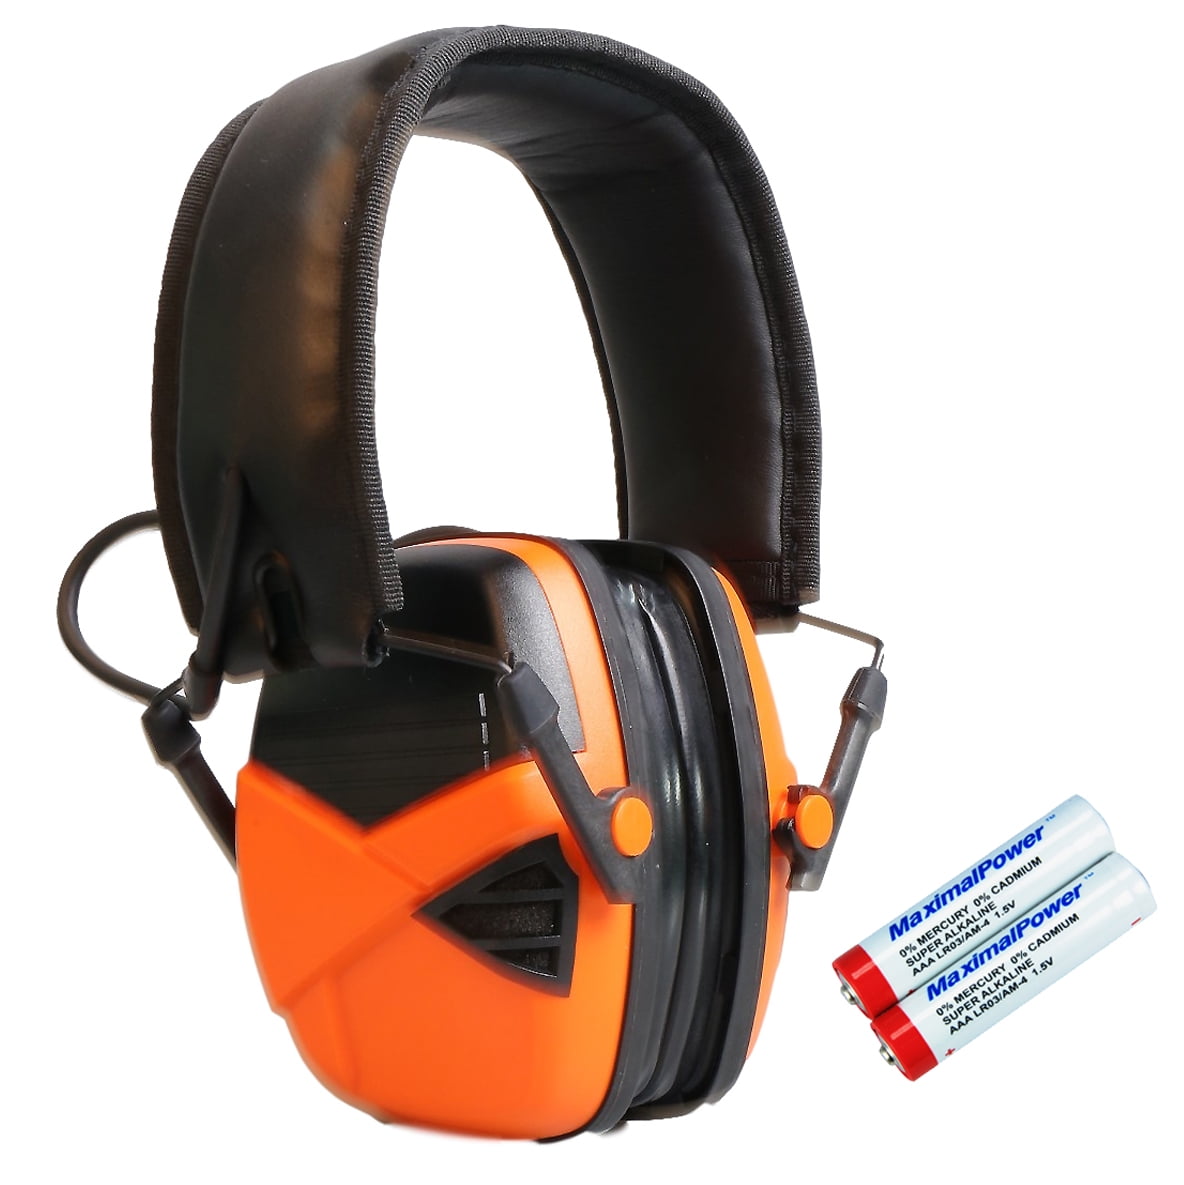 Head-mounted Earmuff Noise Reduction 32db Earcup Sound Hearing Sleep Protection 